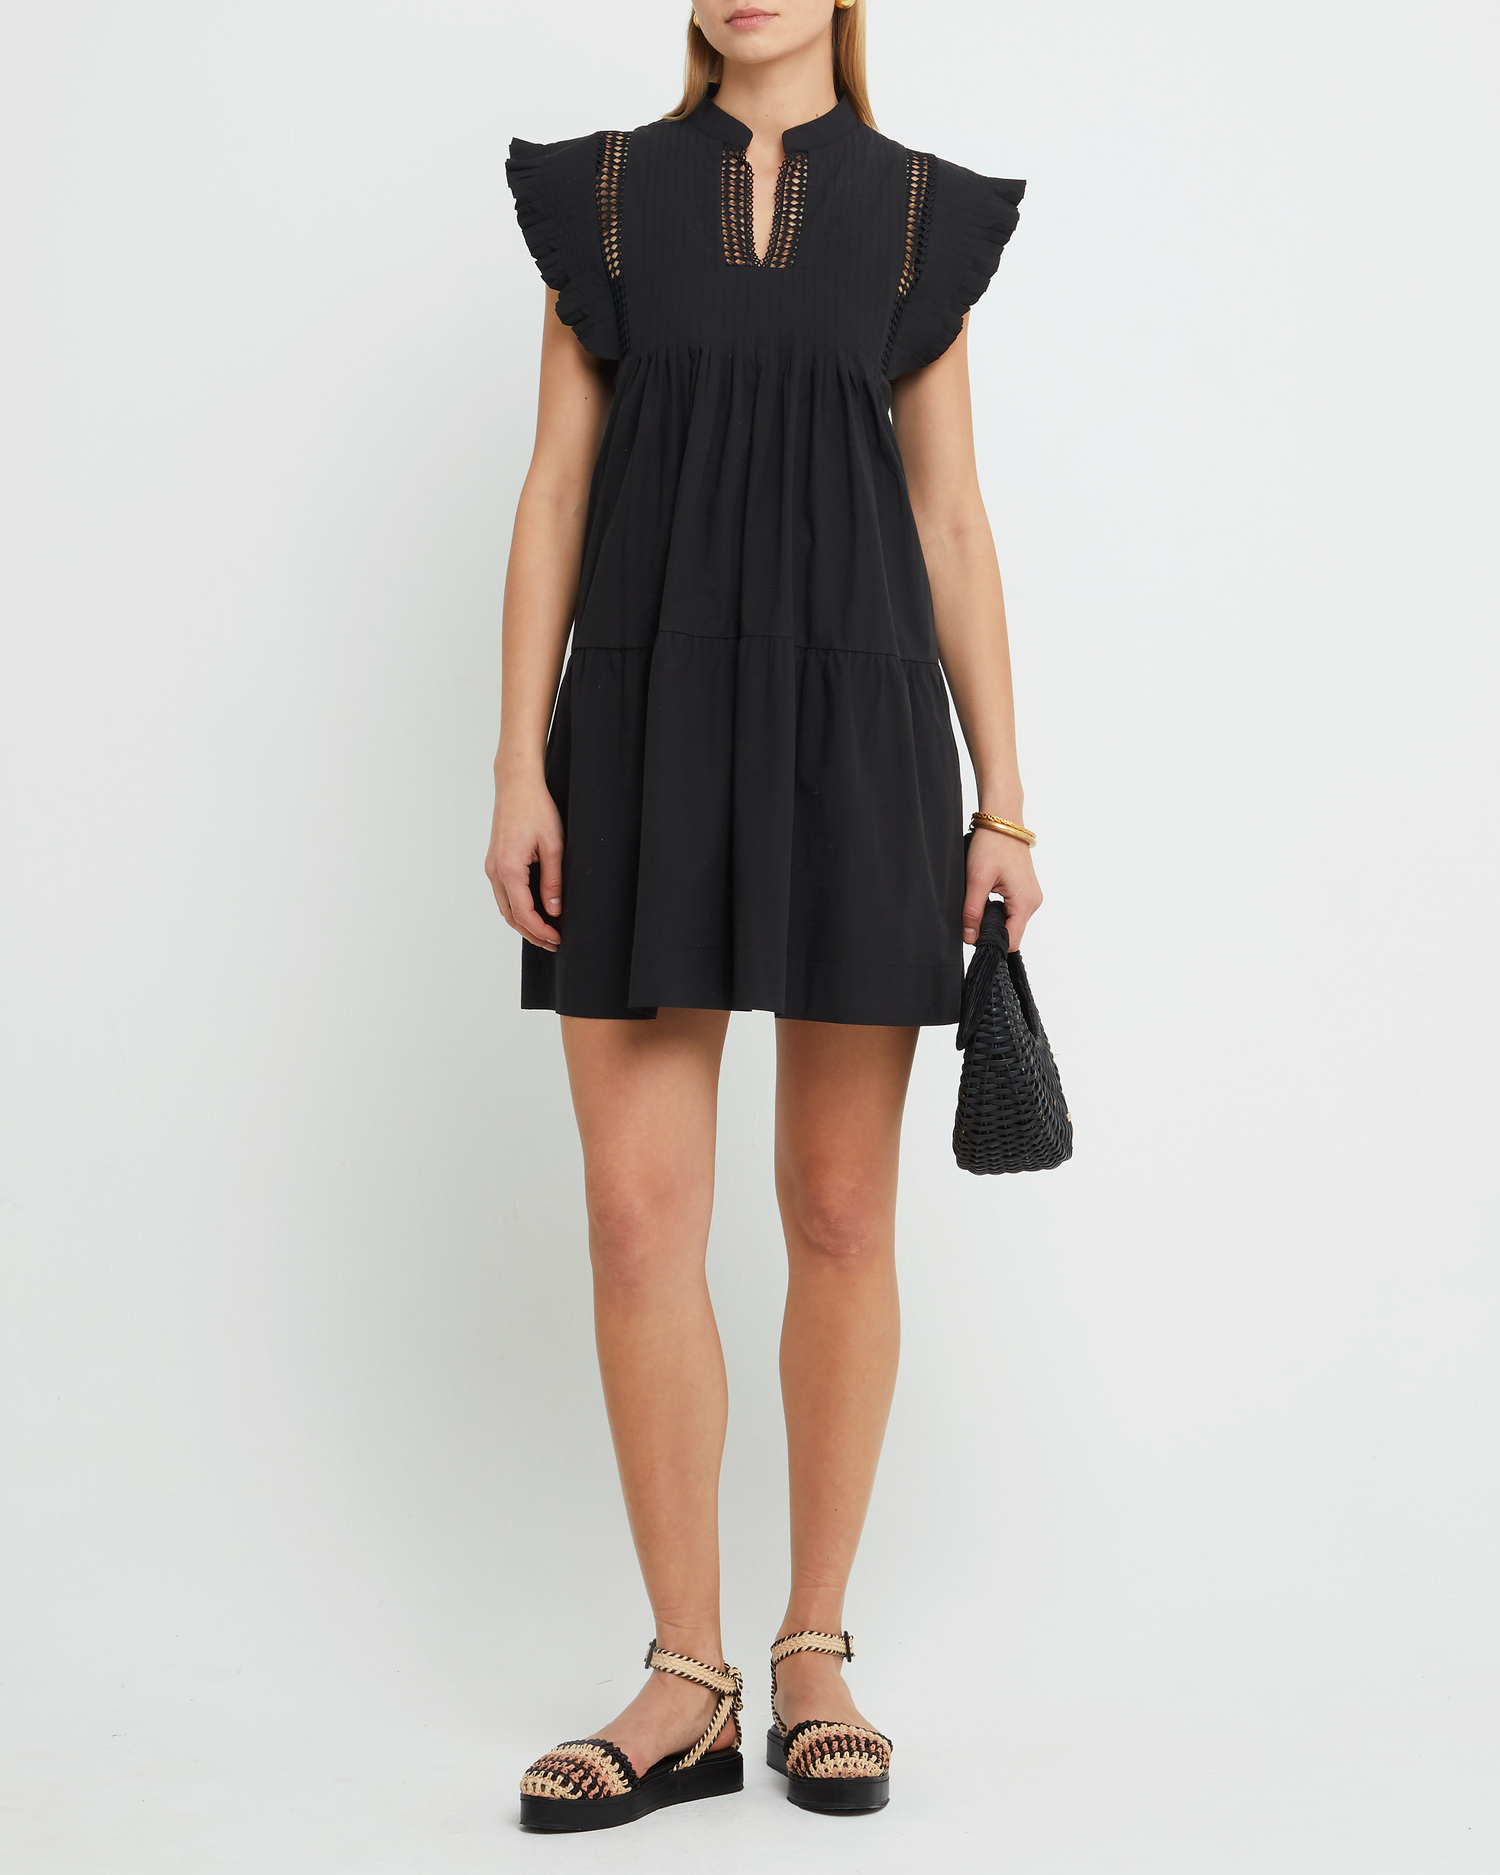 First image of Callan Dress, a black mini dress, paneled, lace, ruffle sleeve, high neckline